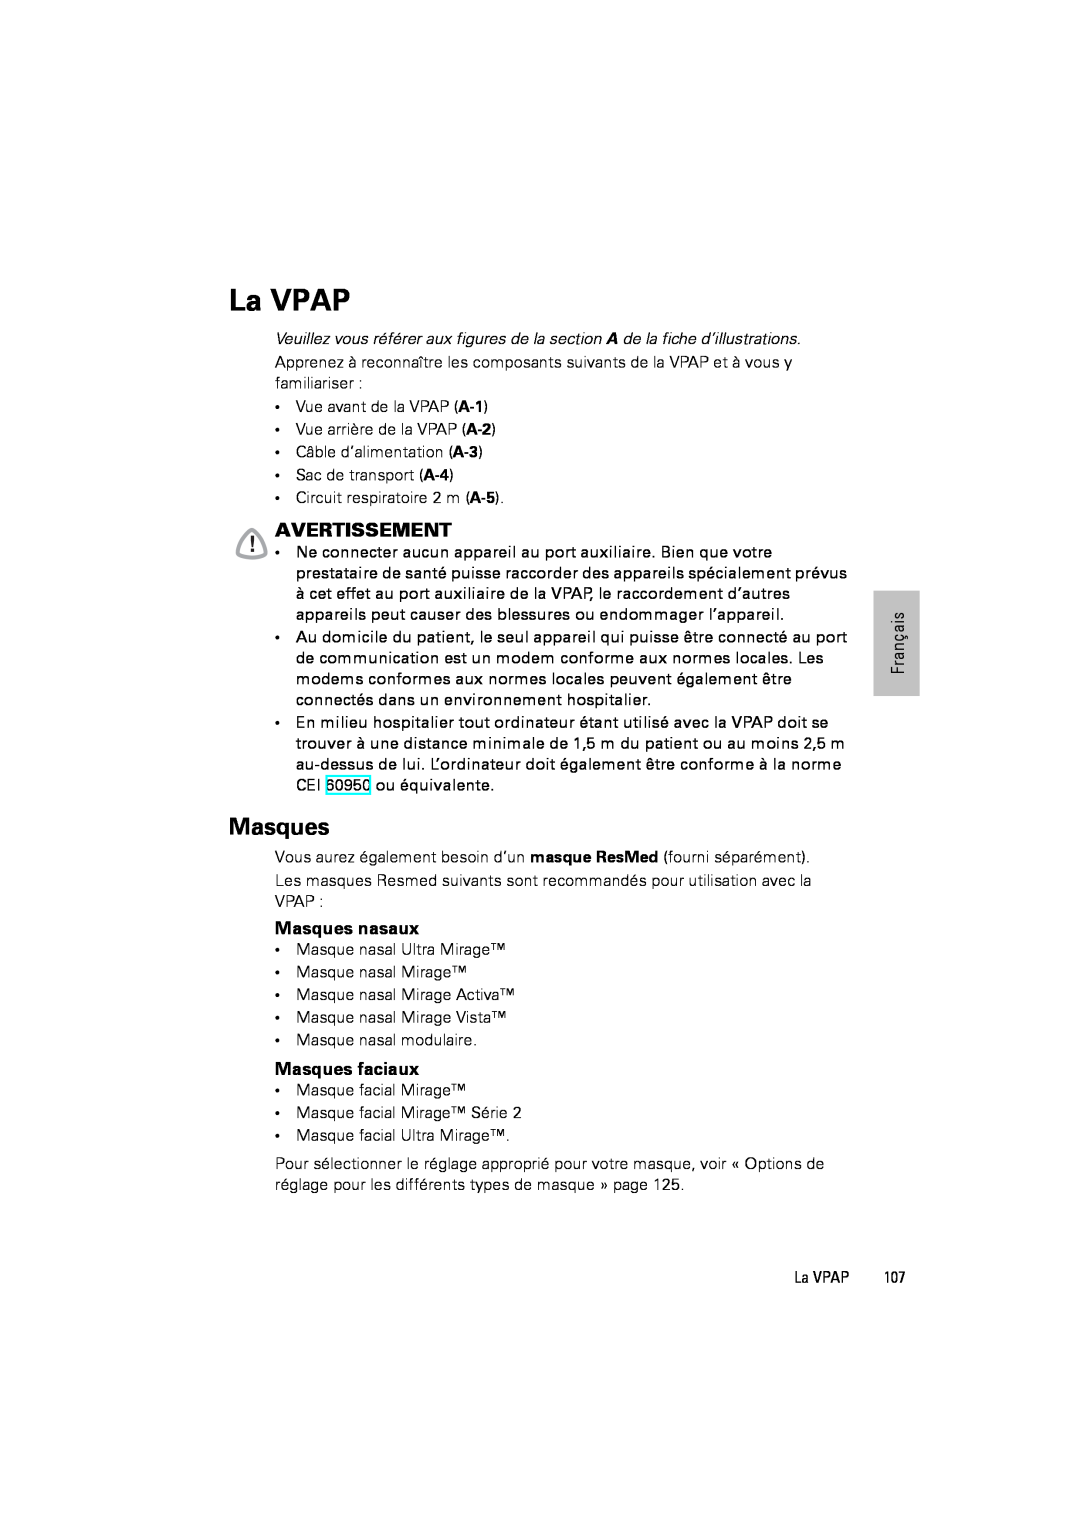 ResMed III & III ST user manual La VPAP, Avertissement, Masques nasaux, Masques faciaux 